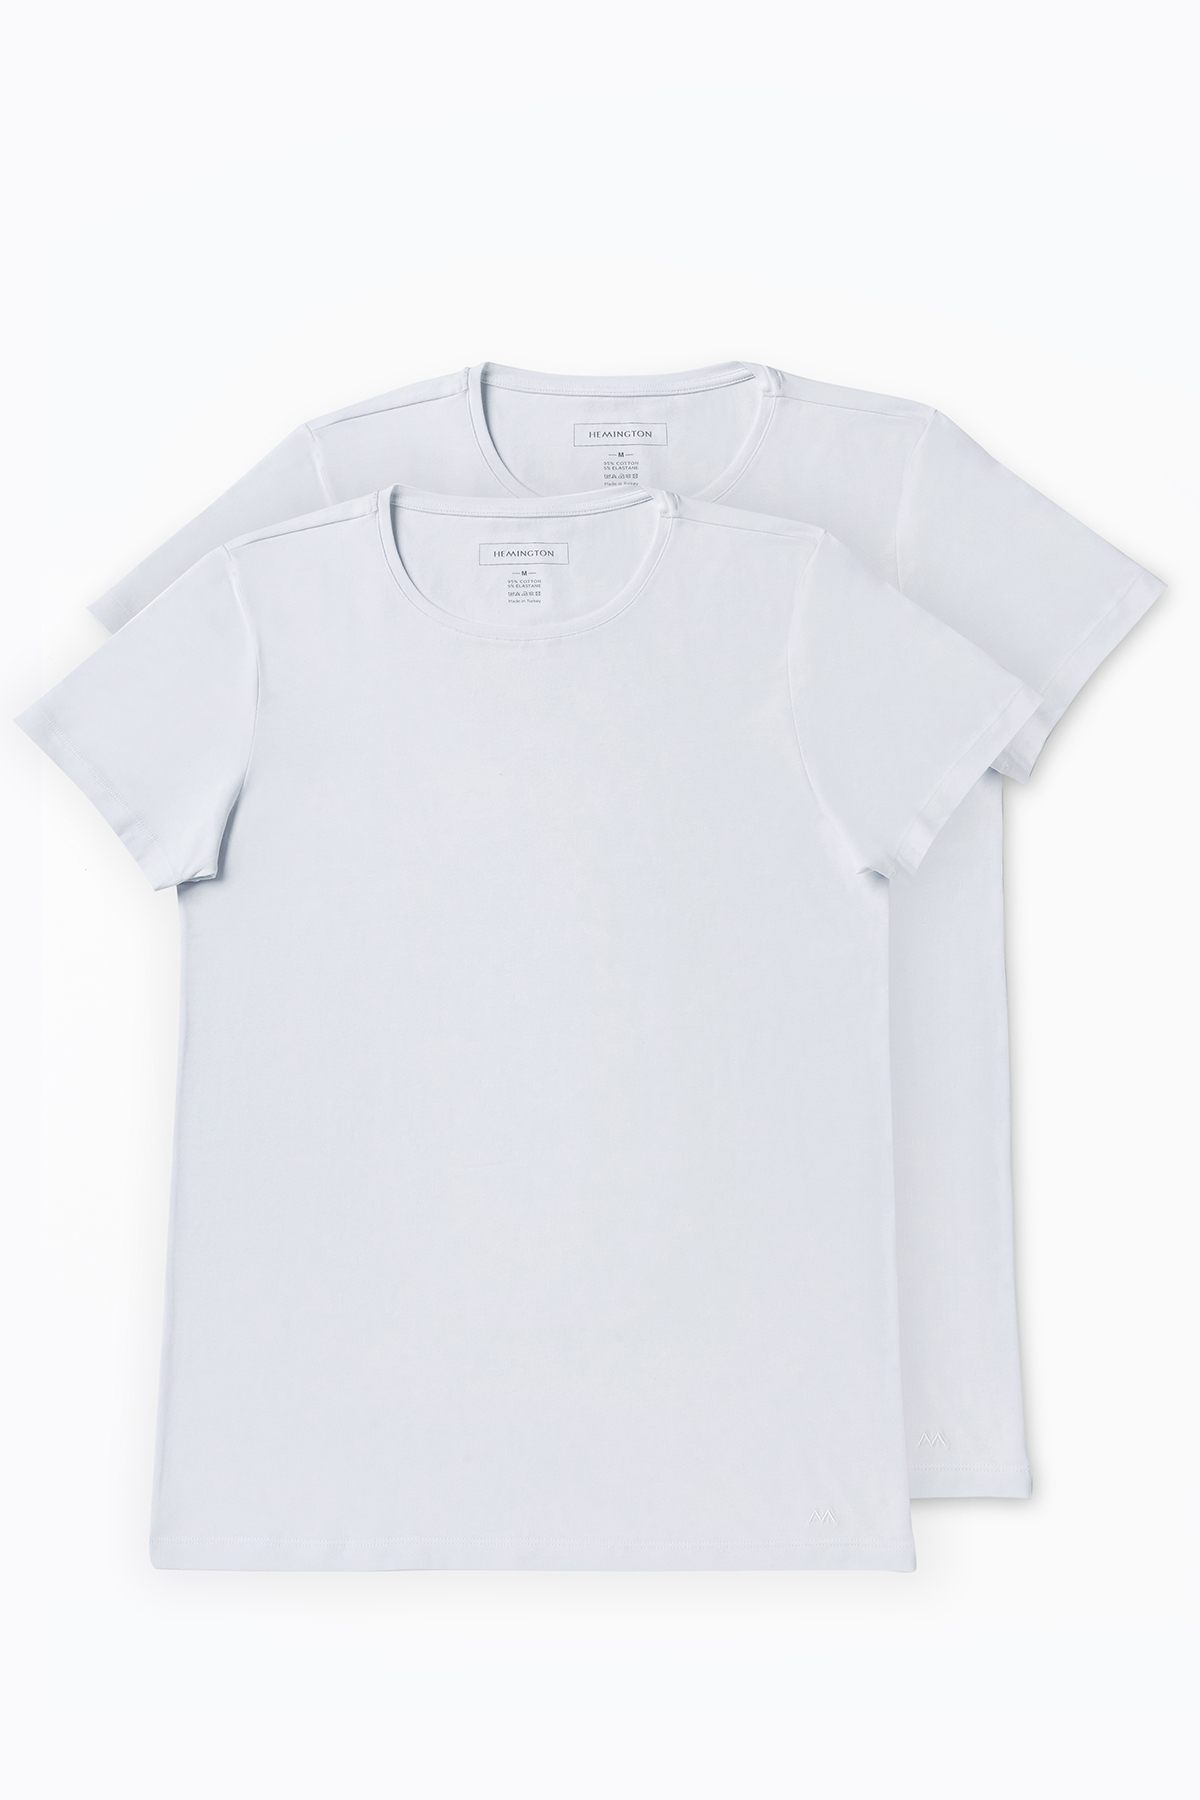 İkili Beyaz İç Giyim T-Shirt Seti